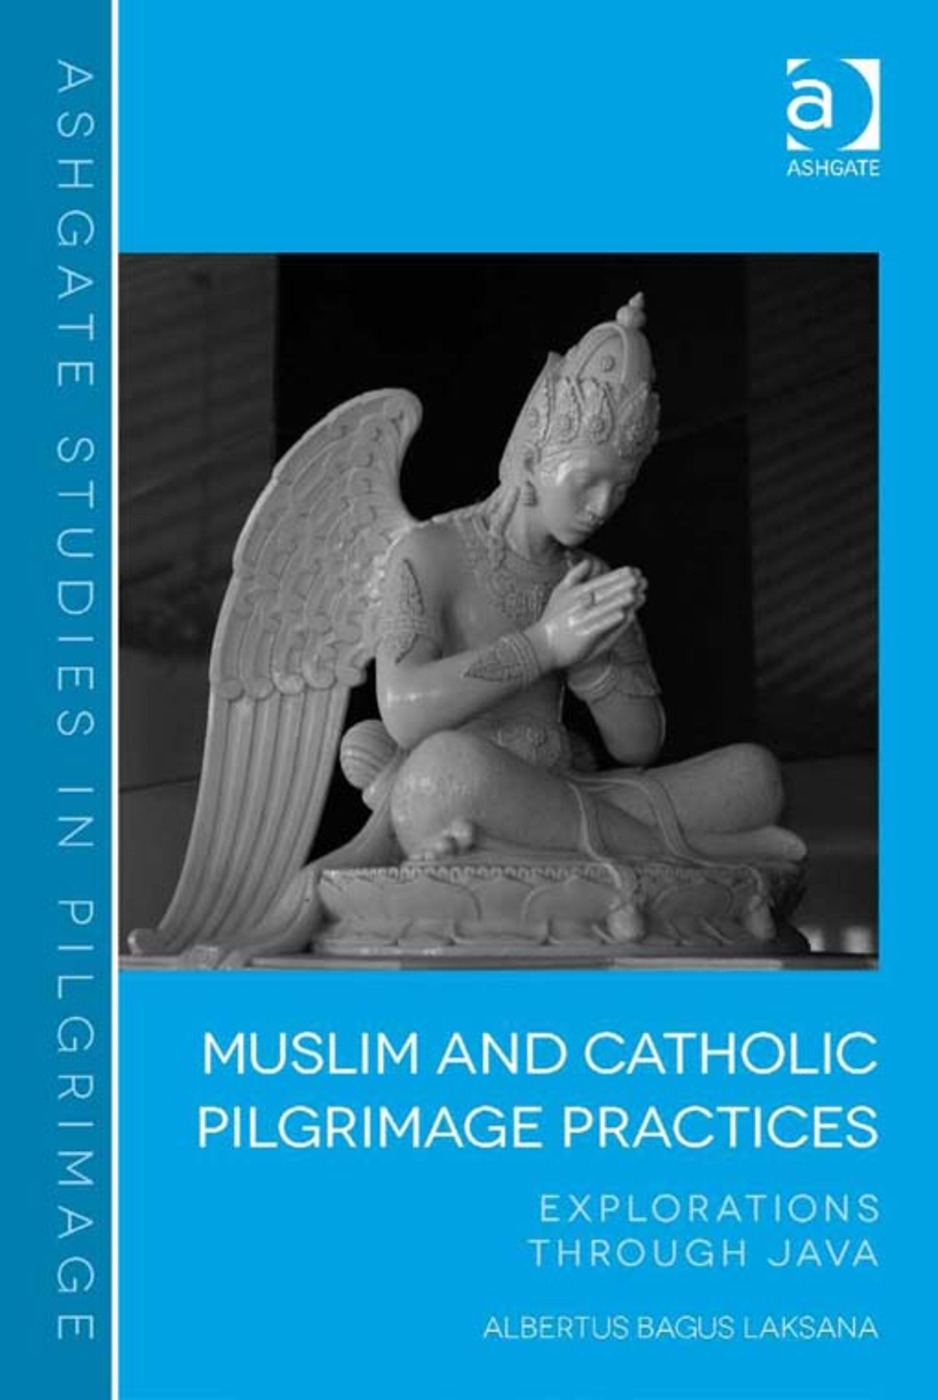 Muslim and Catholic Pilgrimage Practices: Explorations Through Java. Albertus Bagus Laksana